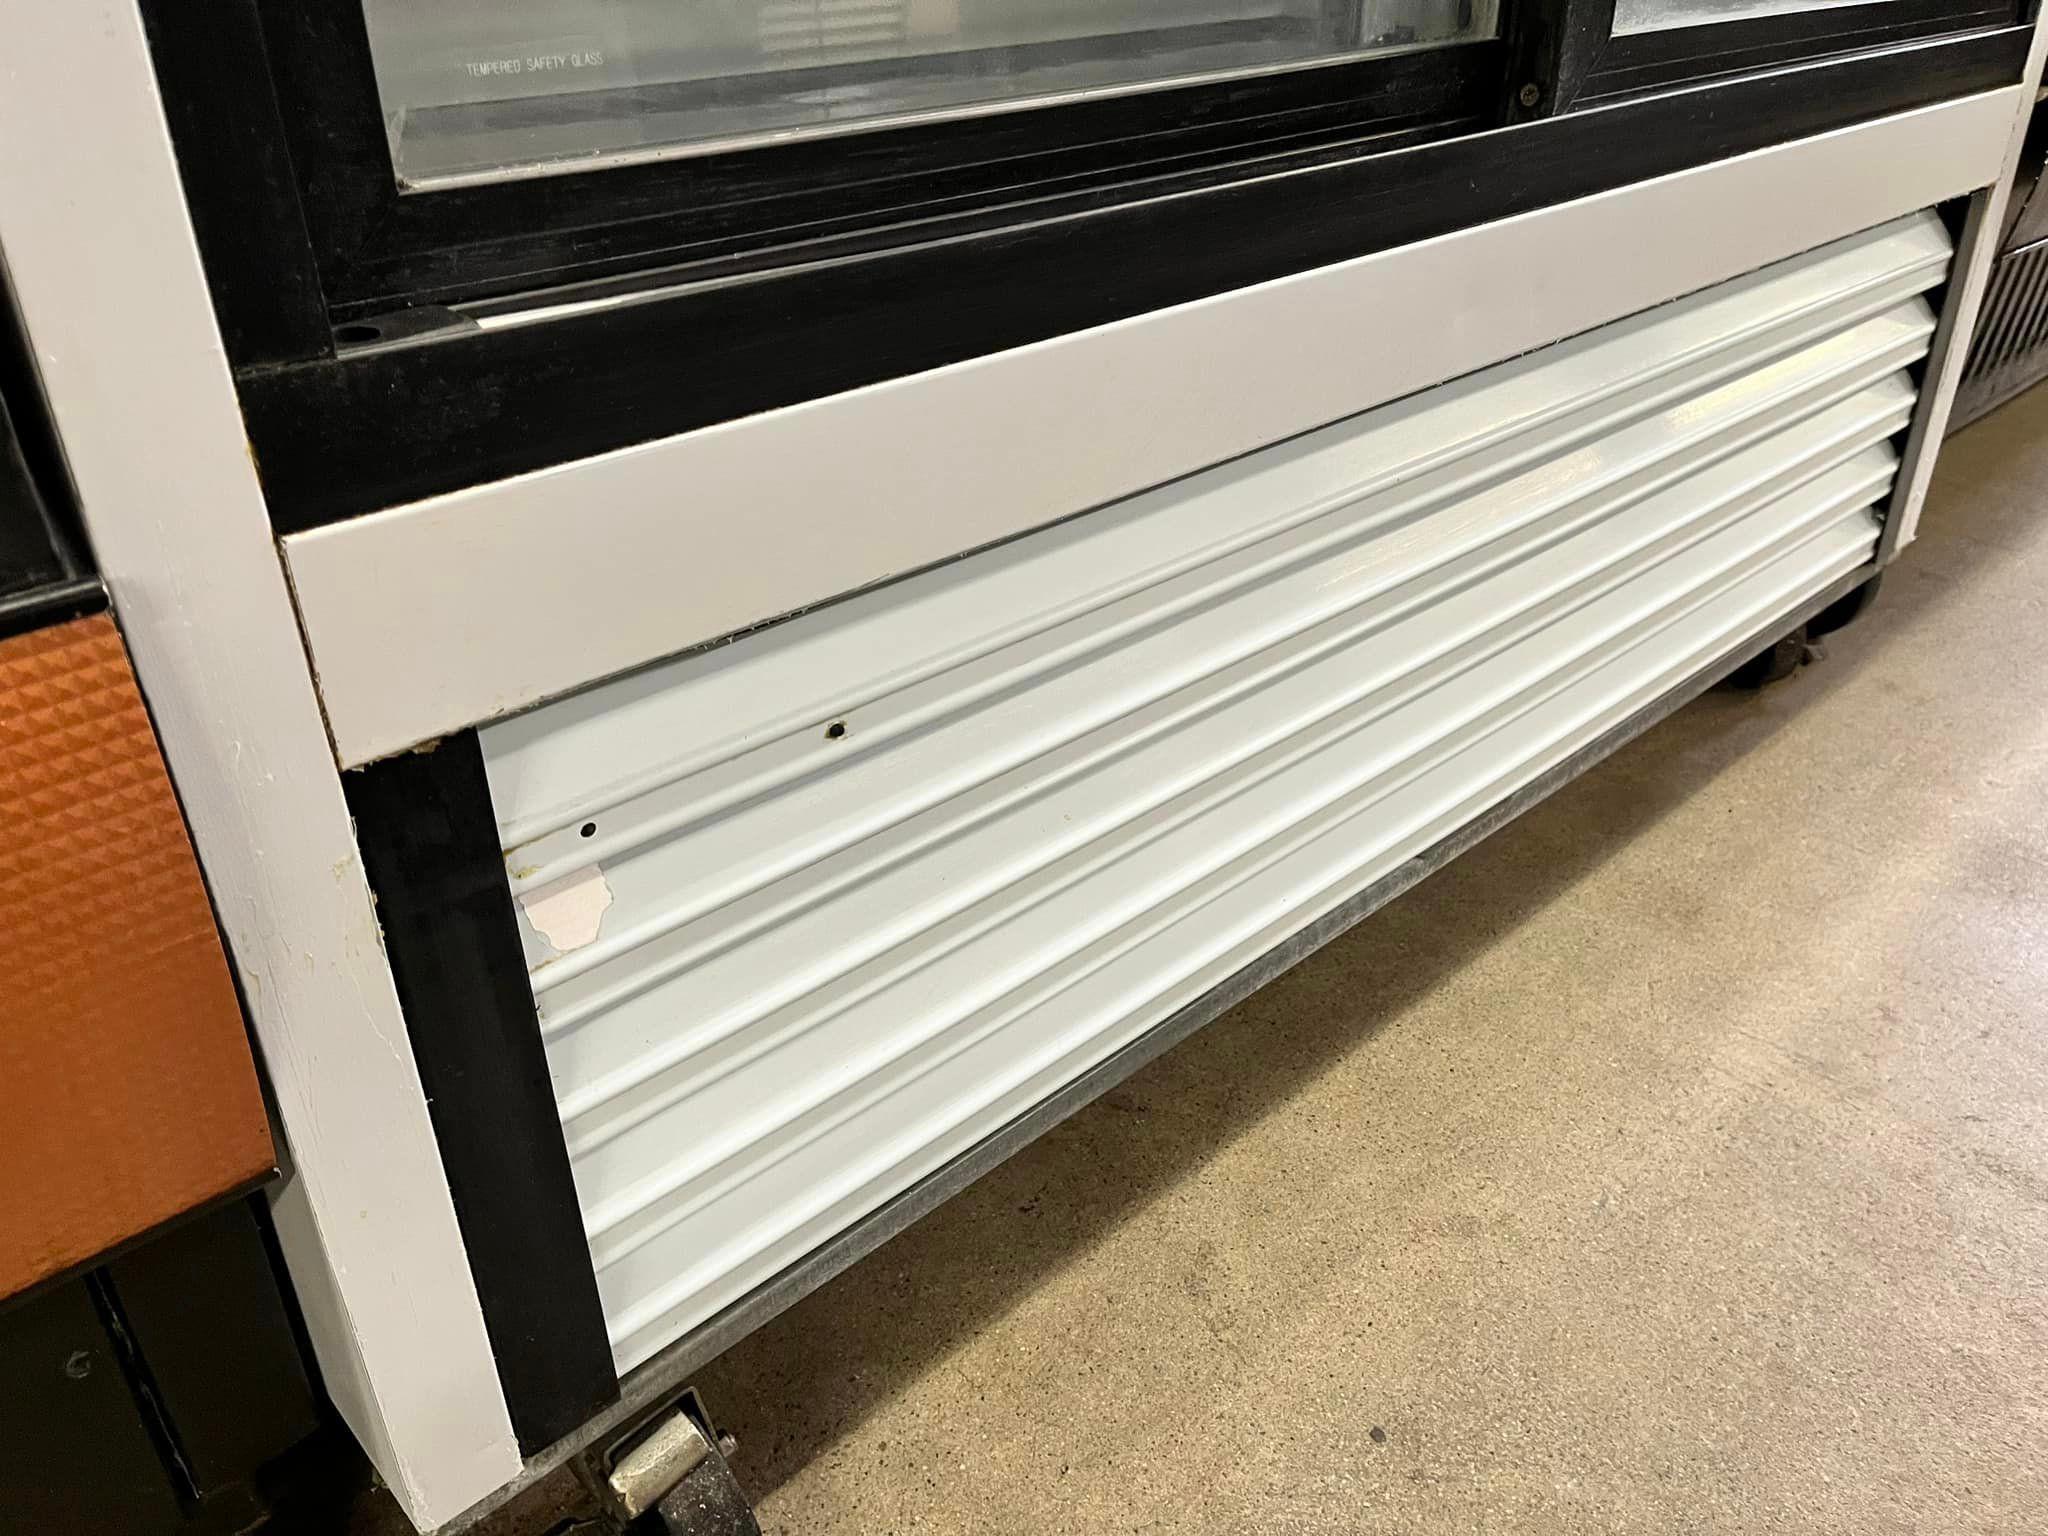 Turbo Aor 2 Sliding Glass Door Refrigerator